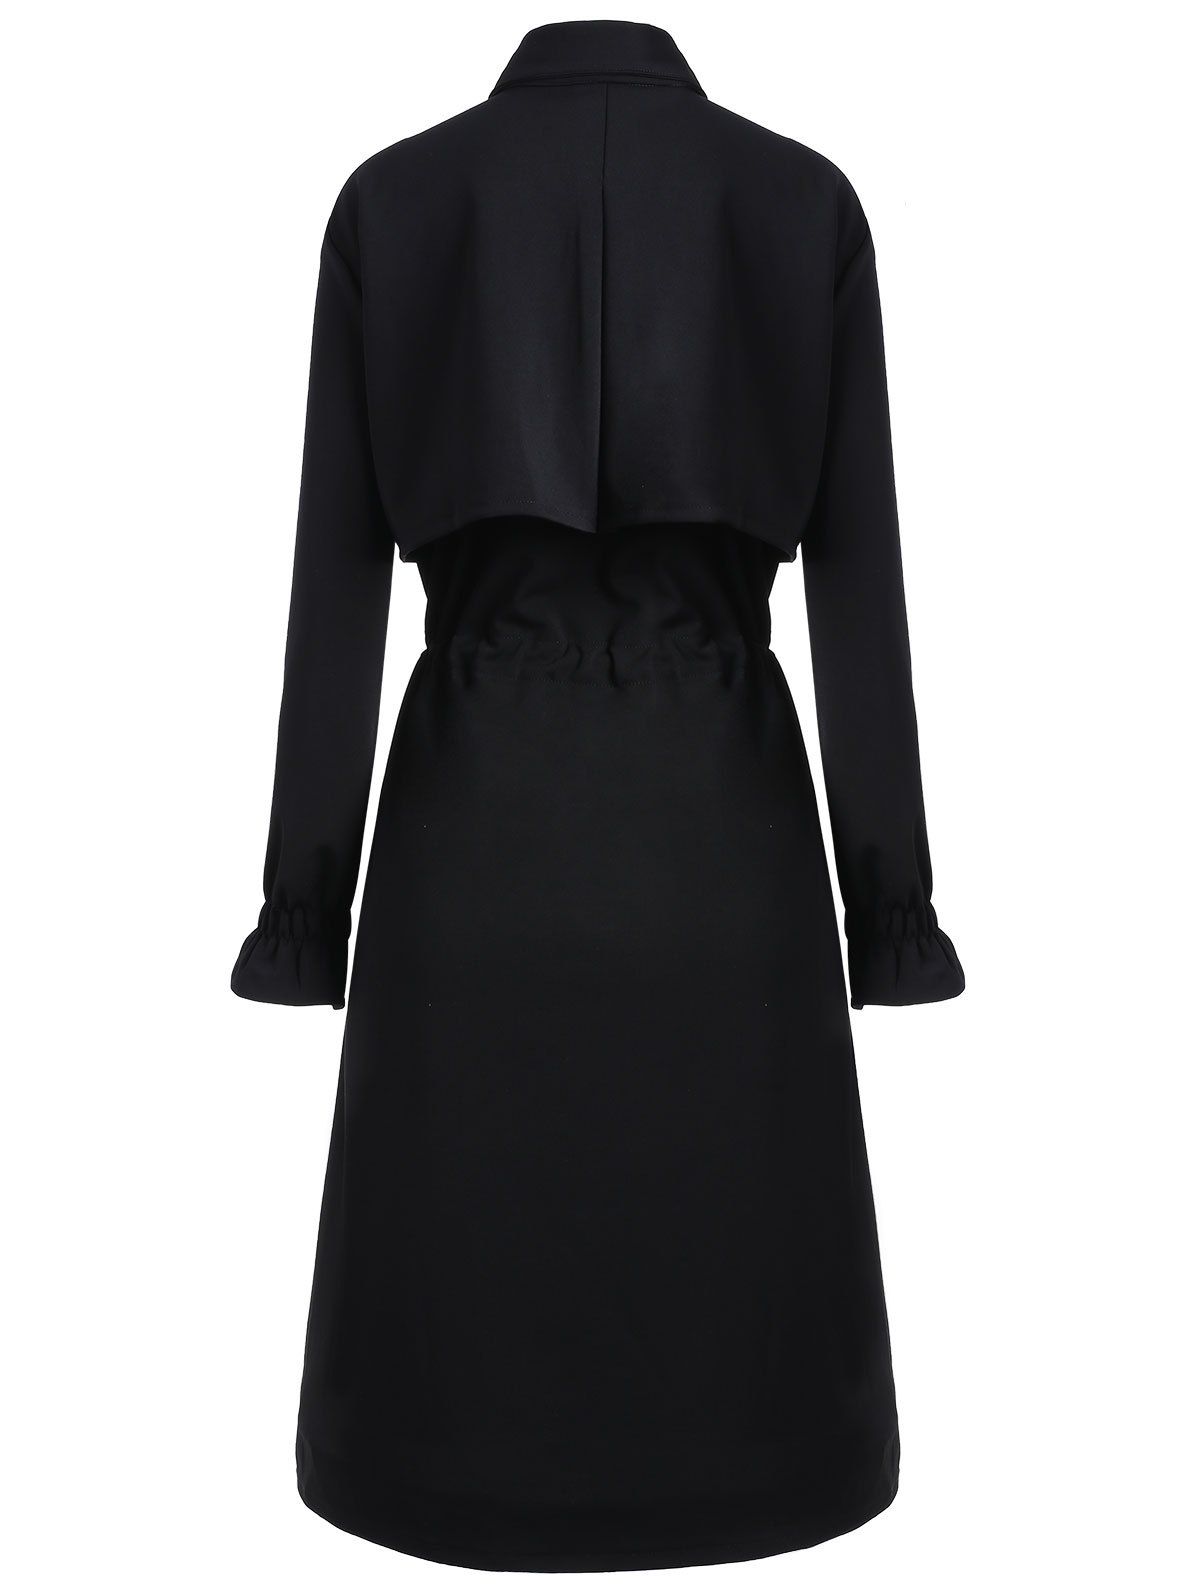 black trench coat dress